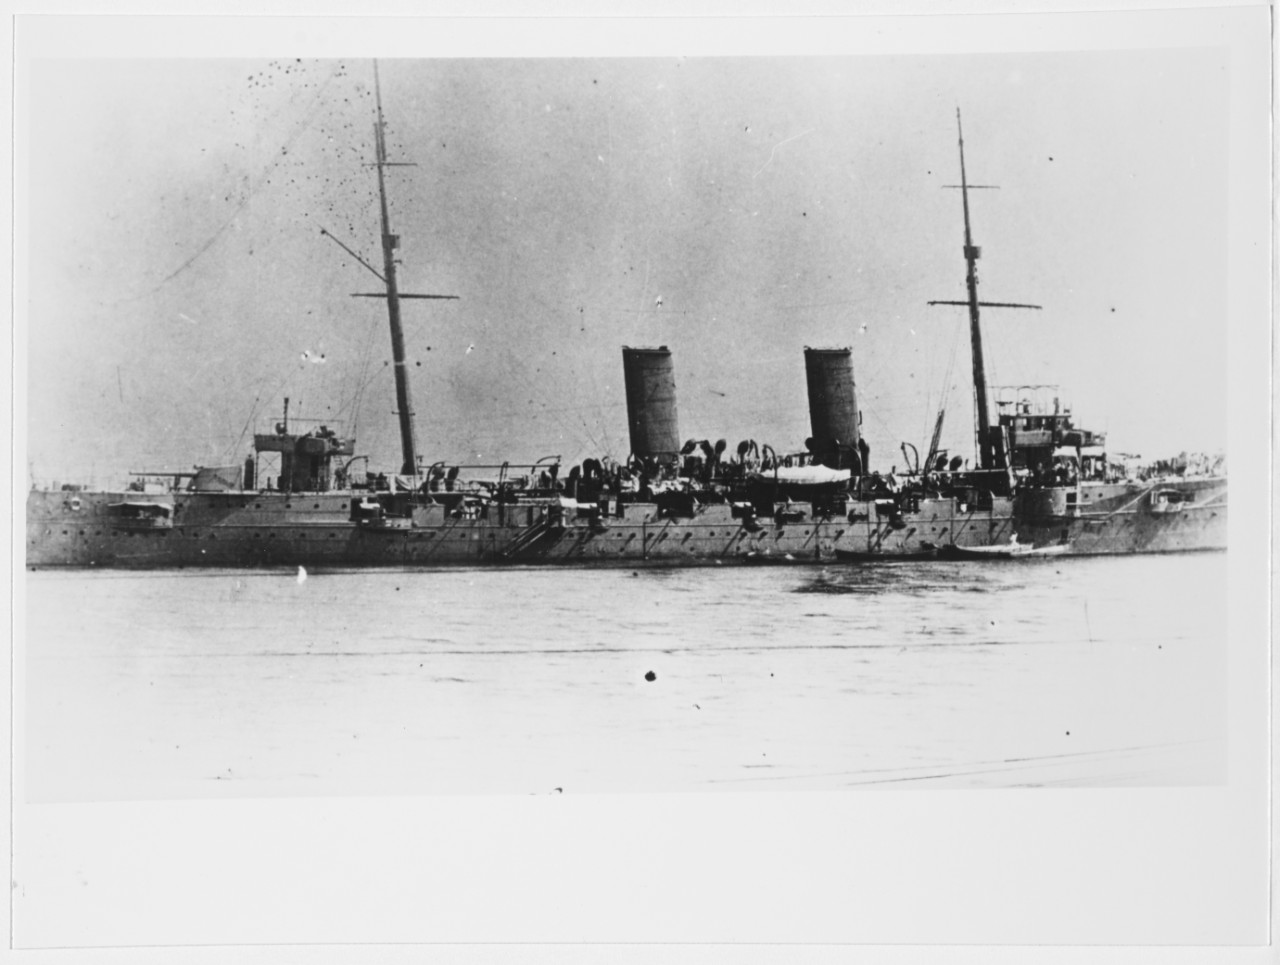 CHITOSE (Japanese Protected Cruiser, 1898-1931)